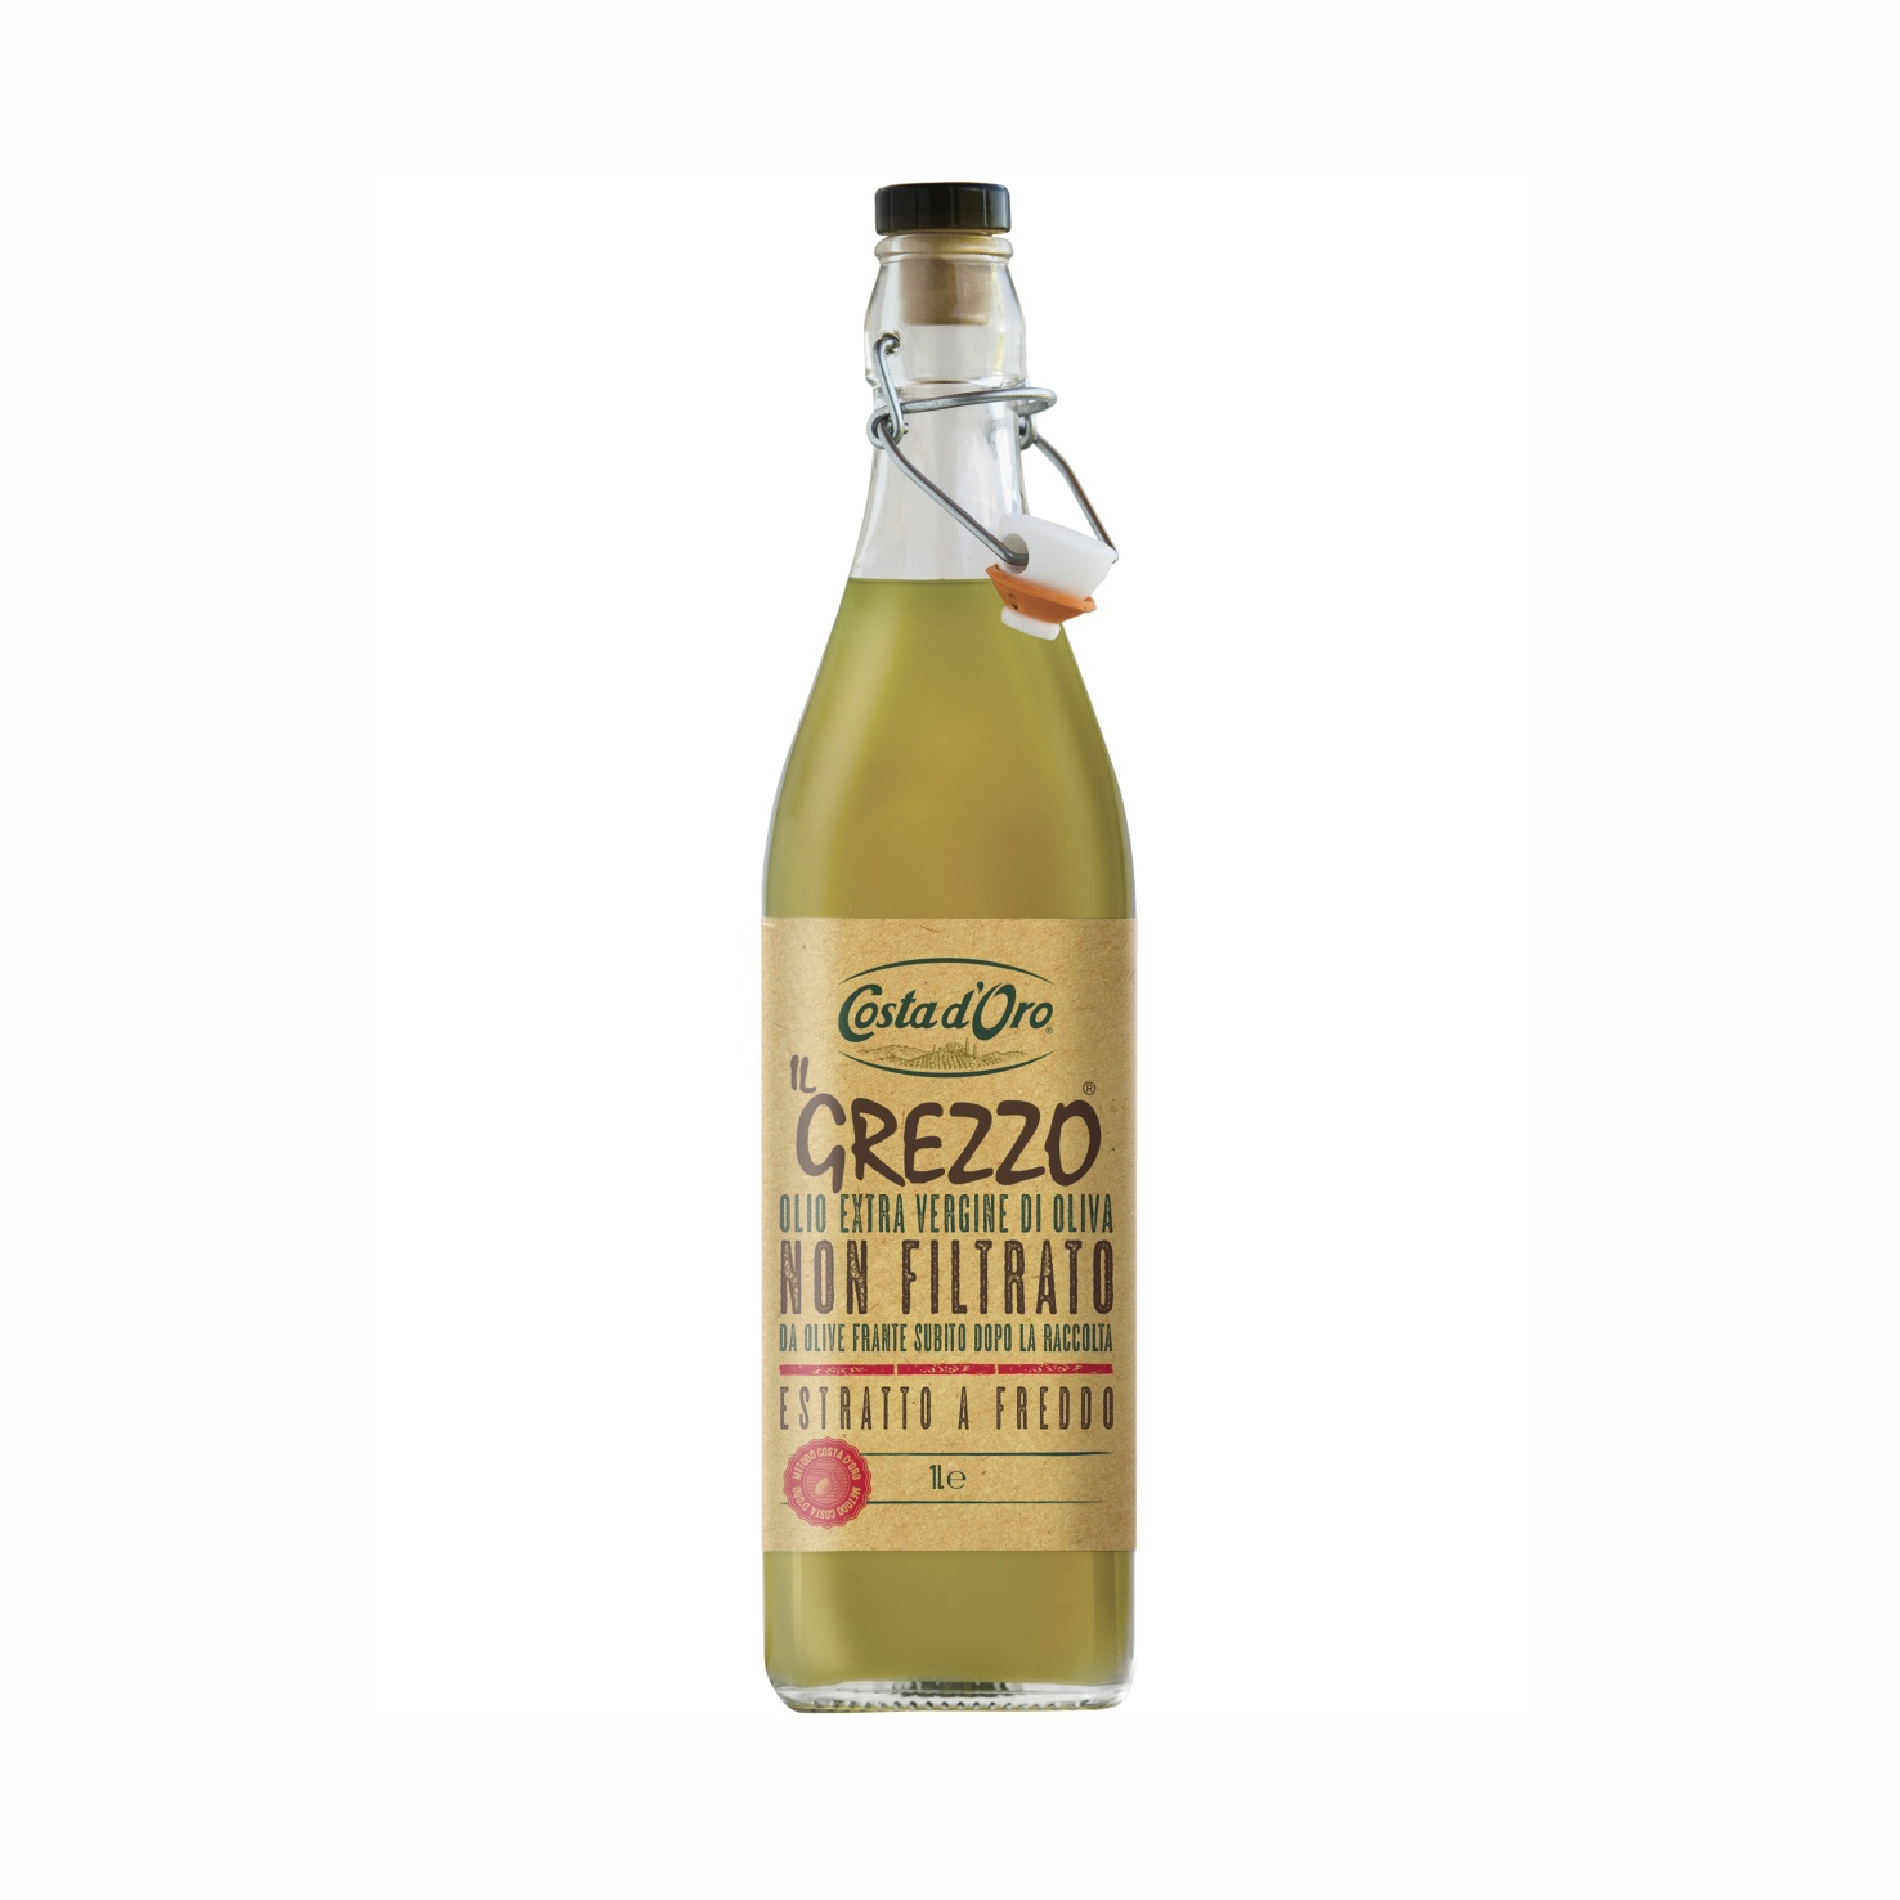 Costa масло оливковое. Оливковое масло Costa d'Oro 1 л. Il grezzo оливковое масло. Оливковое масло Costa d'Oro Extra Virgin. Costa Doro оливковое масло.